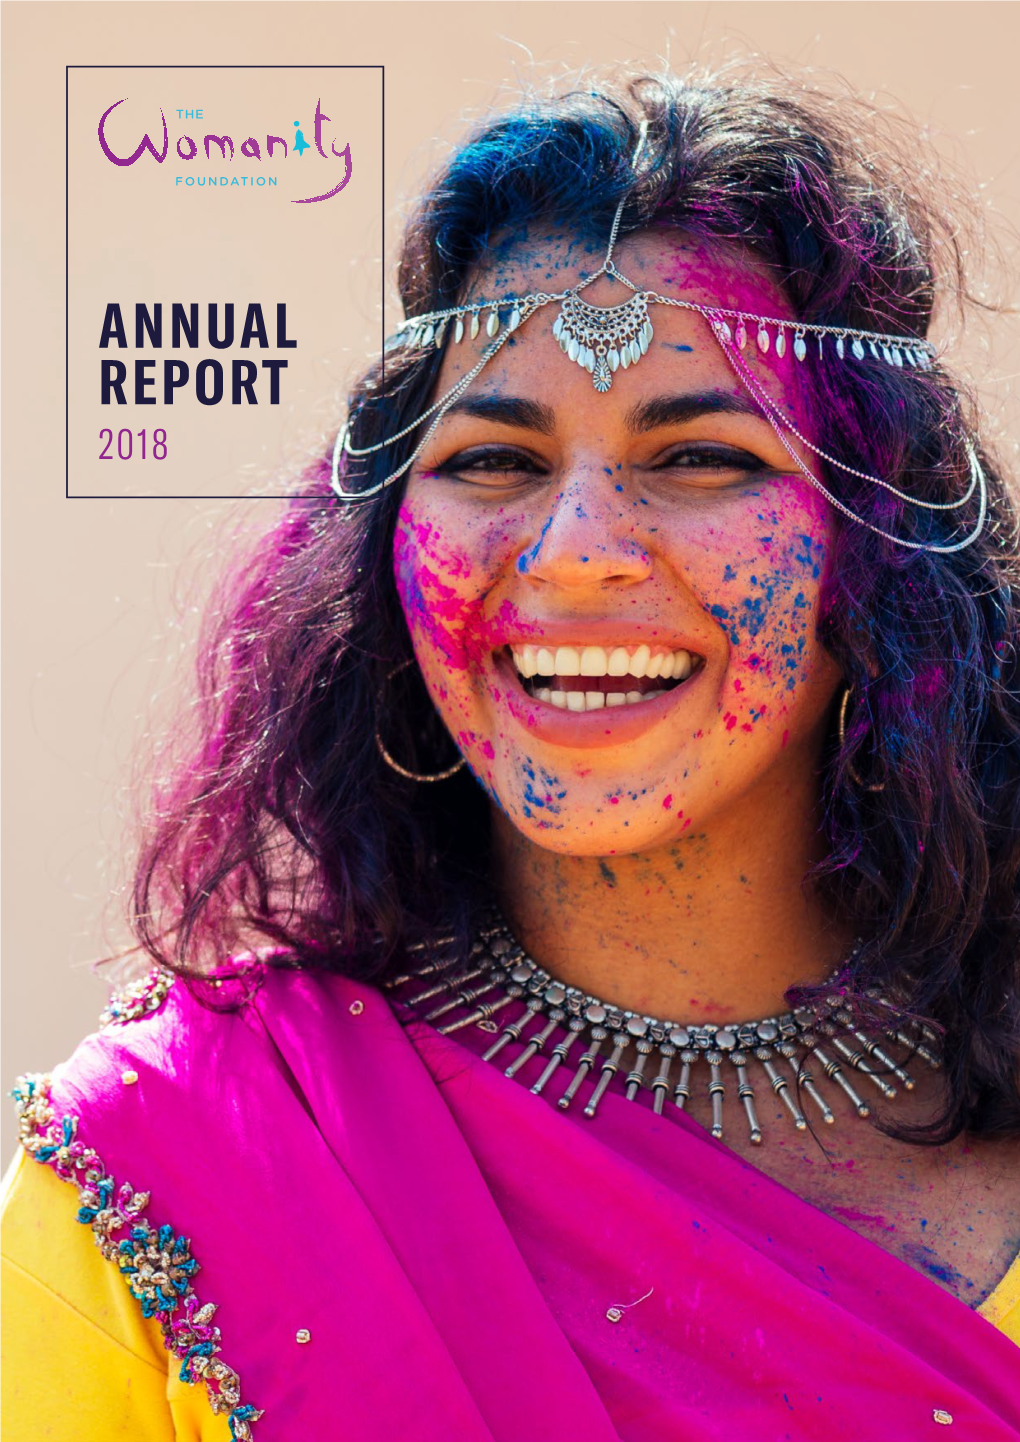 ANNUAL REPORT 2018 2 Womanity Annual Report 2018 Womanity Annual Report 2018 3